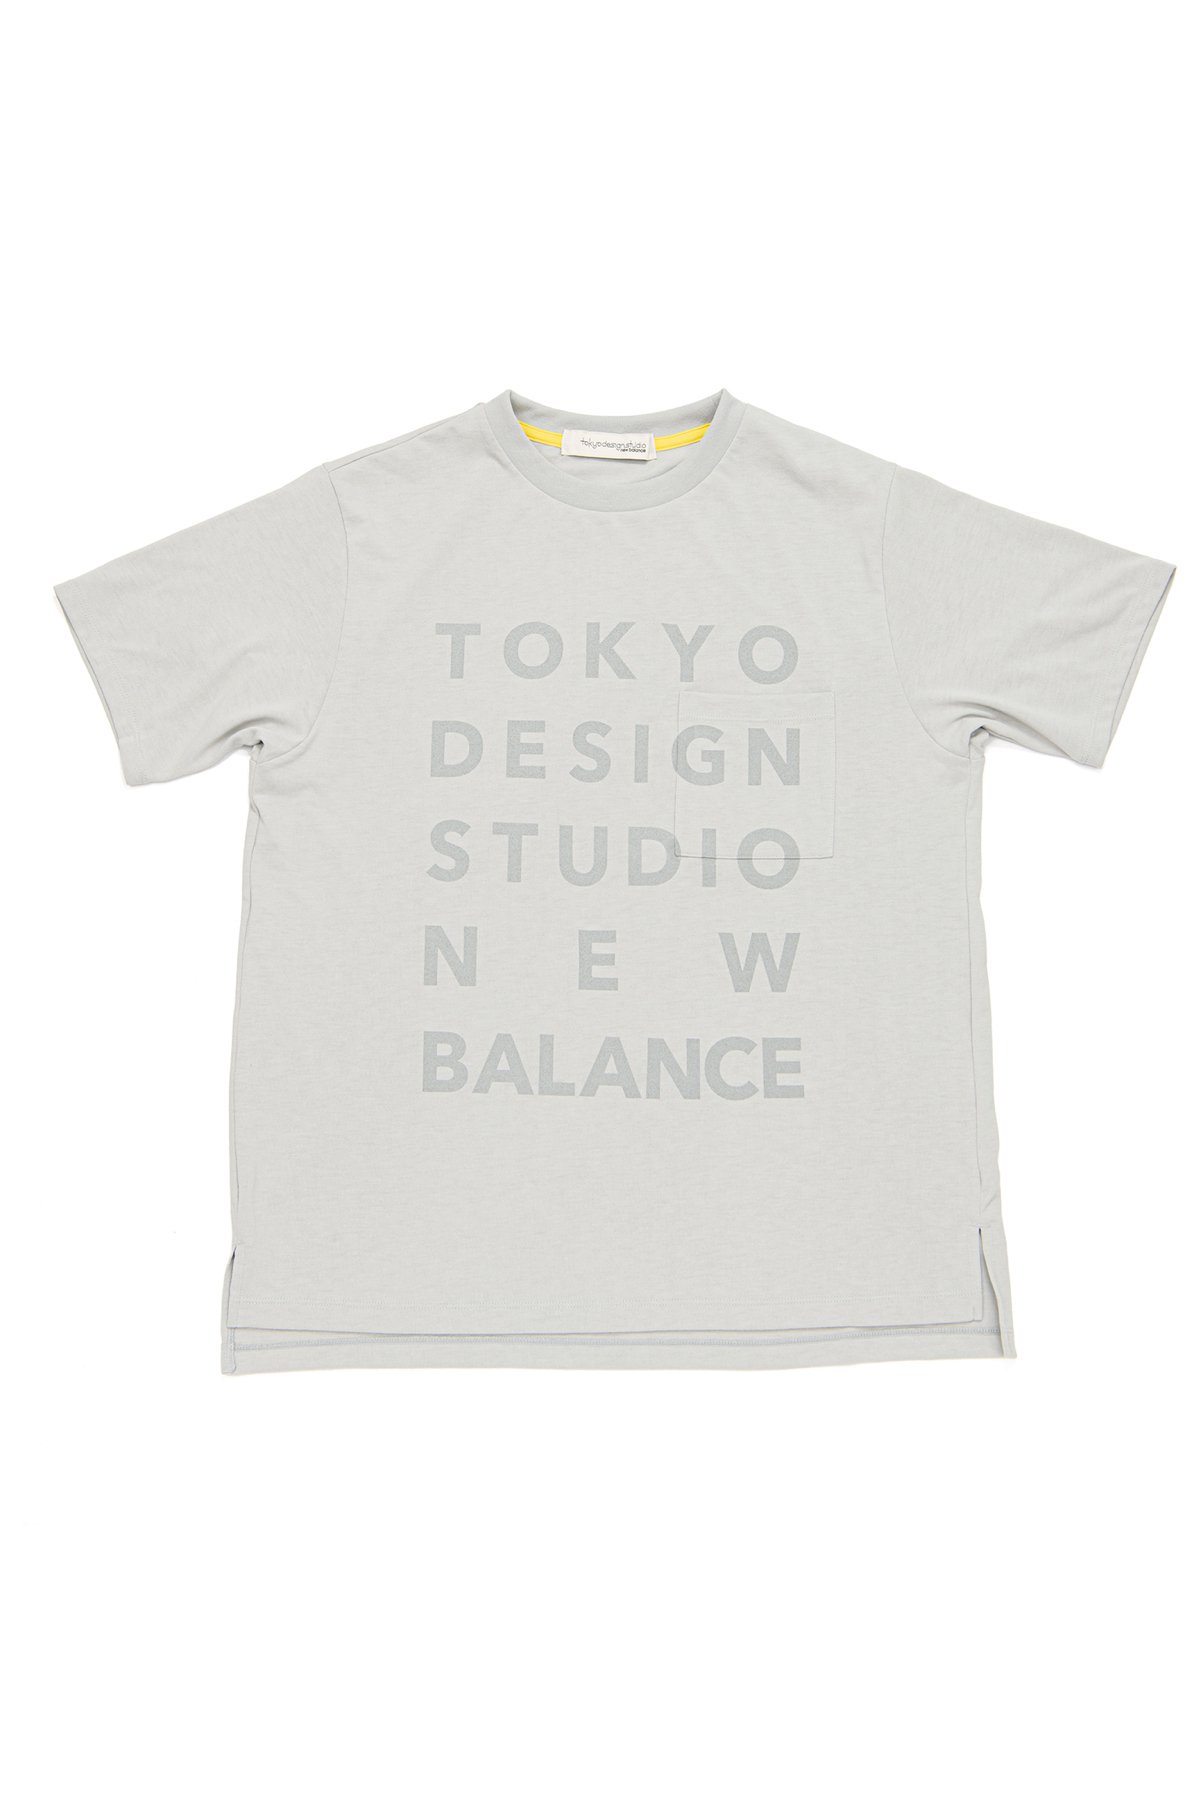 TOKYO DESIGN STUDIO New Balance 東京デザインスタジオ ニューバランス 通販 正規店 フェートン - Phaeton  Smart Clothes Online Store